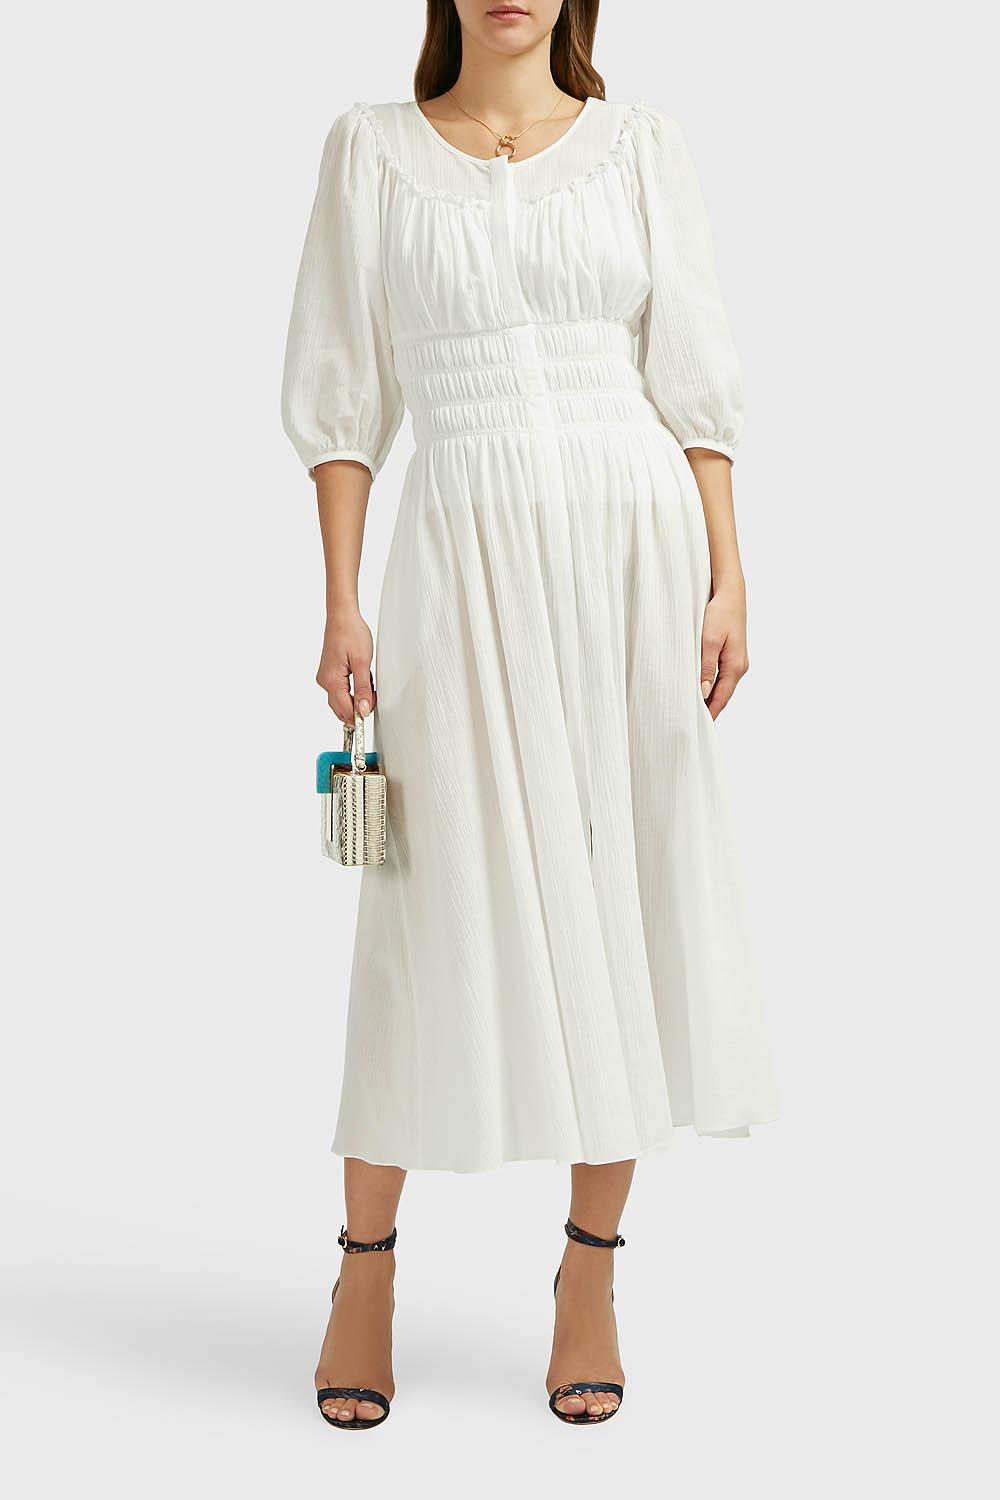 Lyst - Three Graces London Arabella Smocked Cotton Dress in White